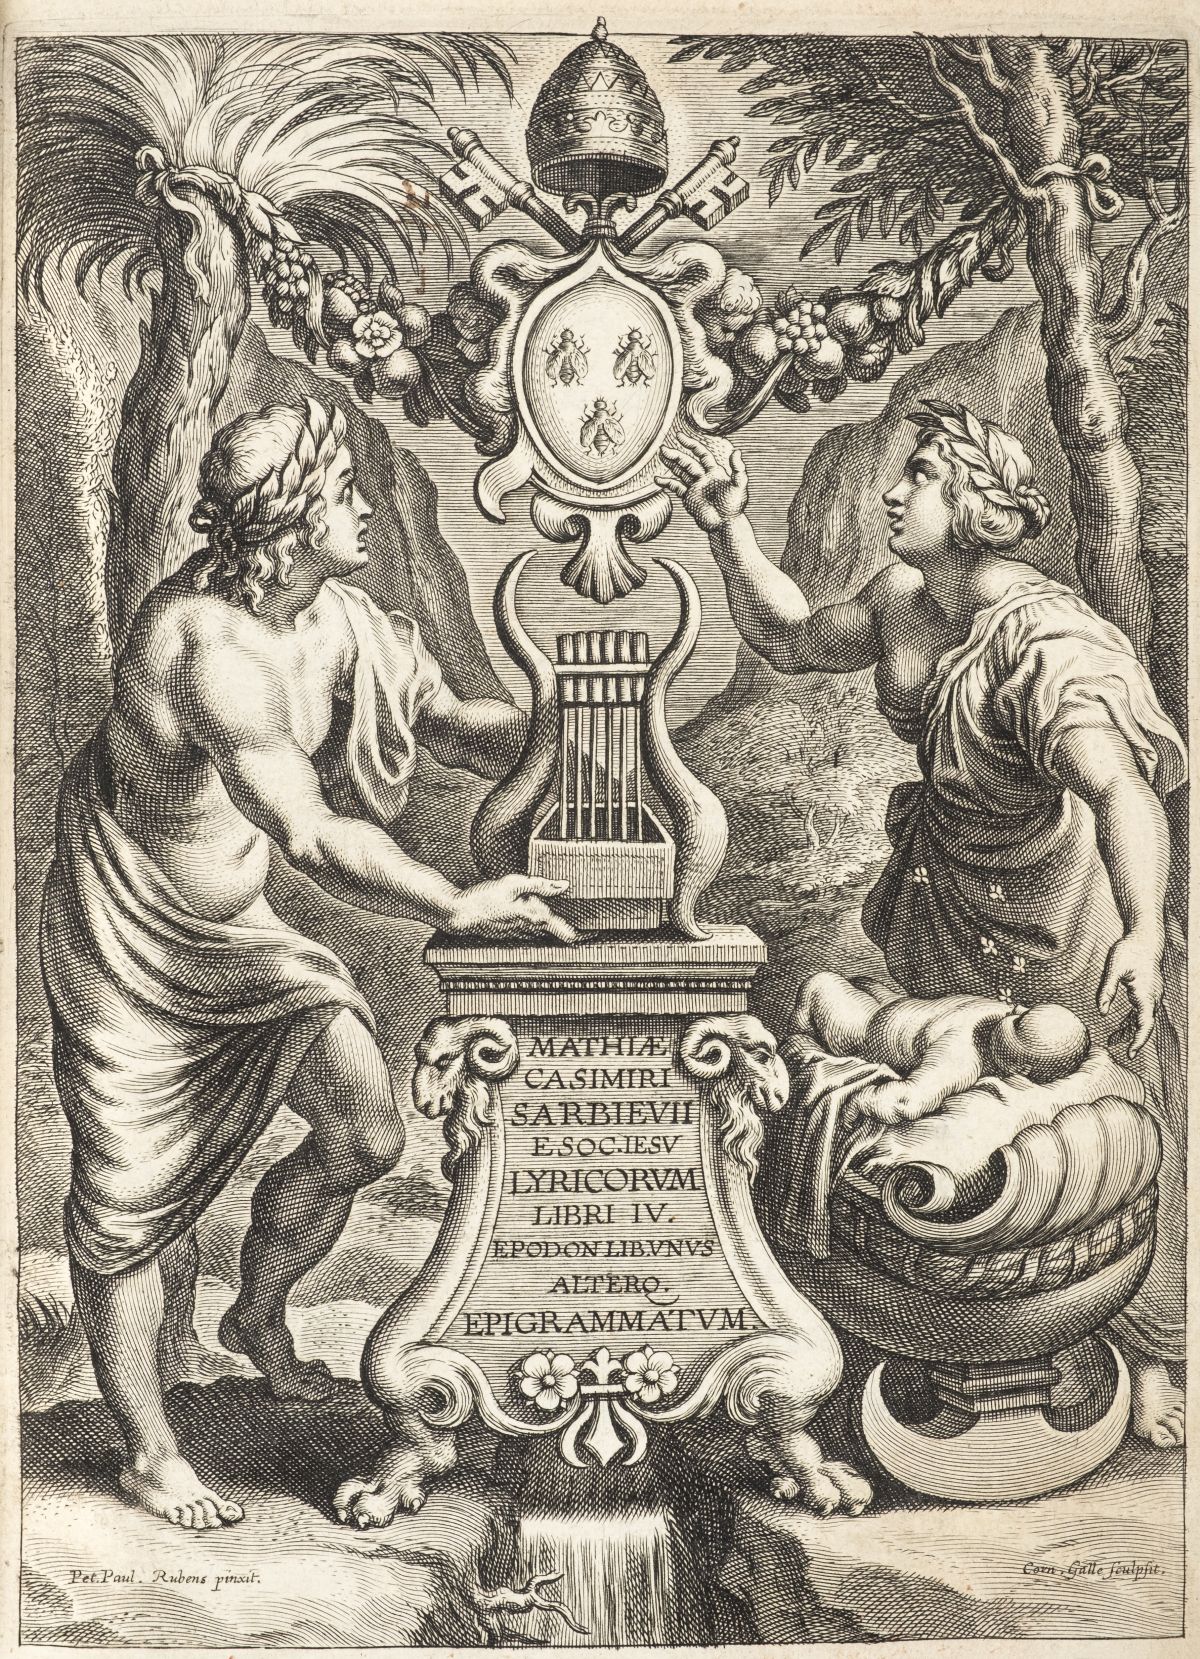 Sarbiewski (Maciej Kazimierz). Lyricorum libri IV, Antwerp: Plantin, 1632